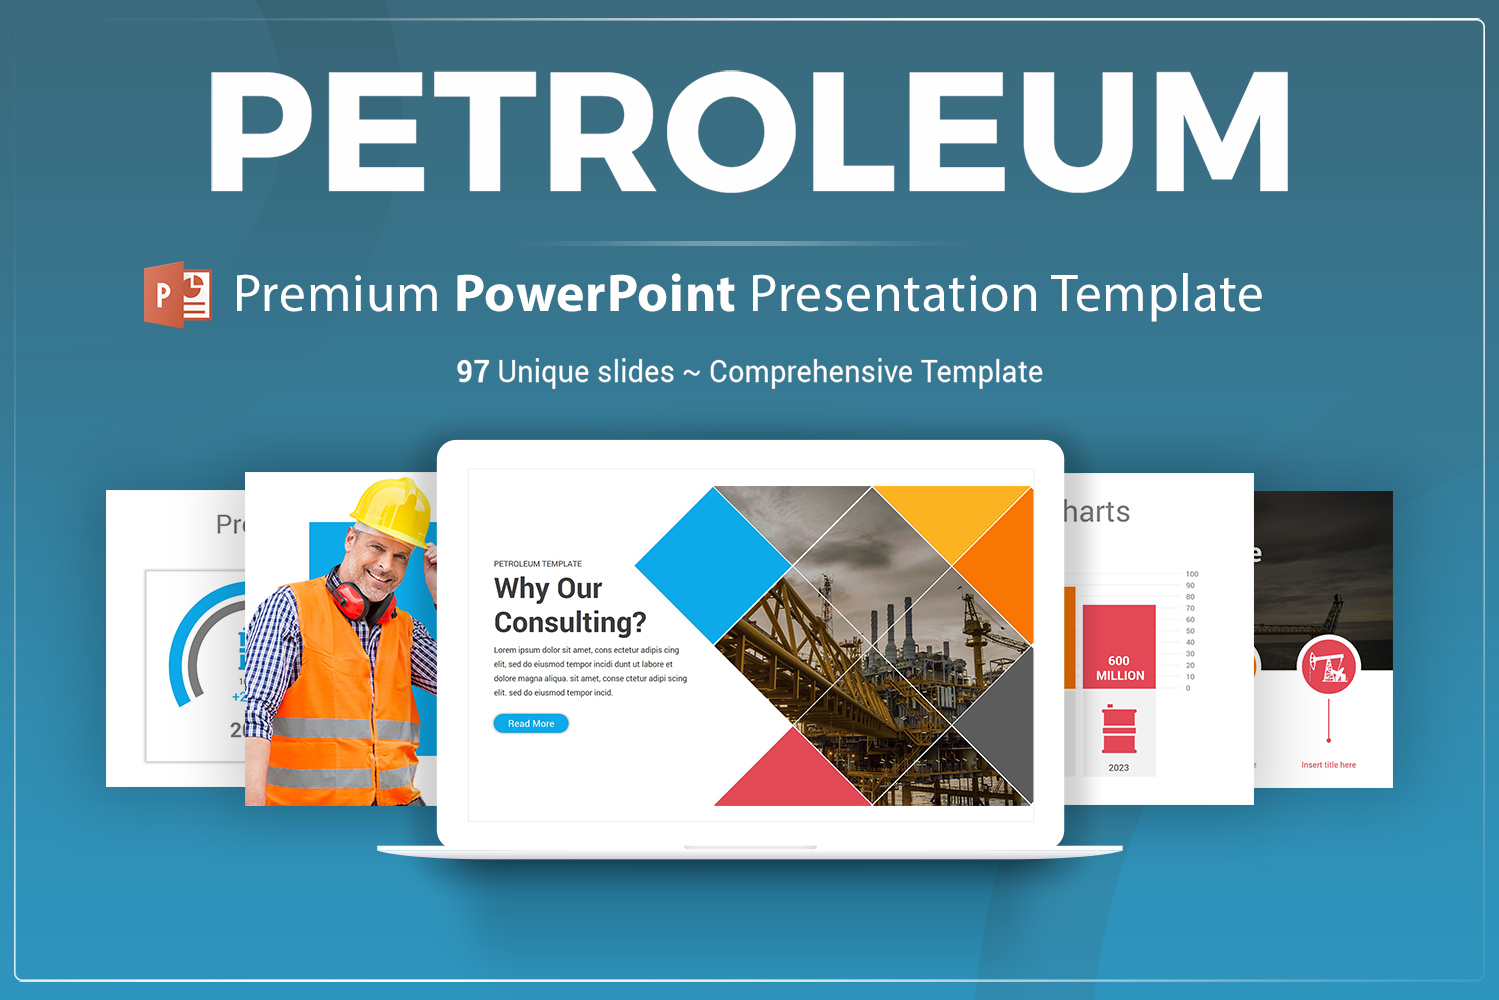 Petroleum PowerPoint Presentation Template